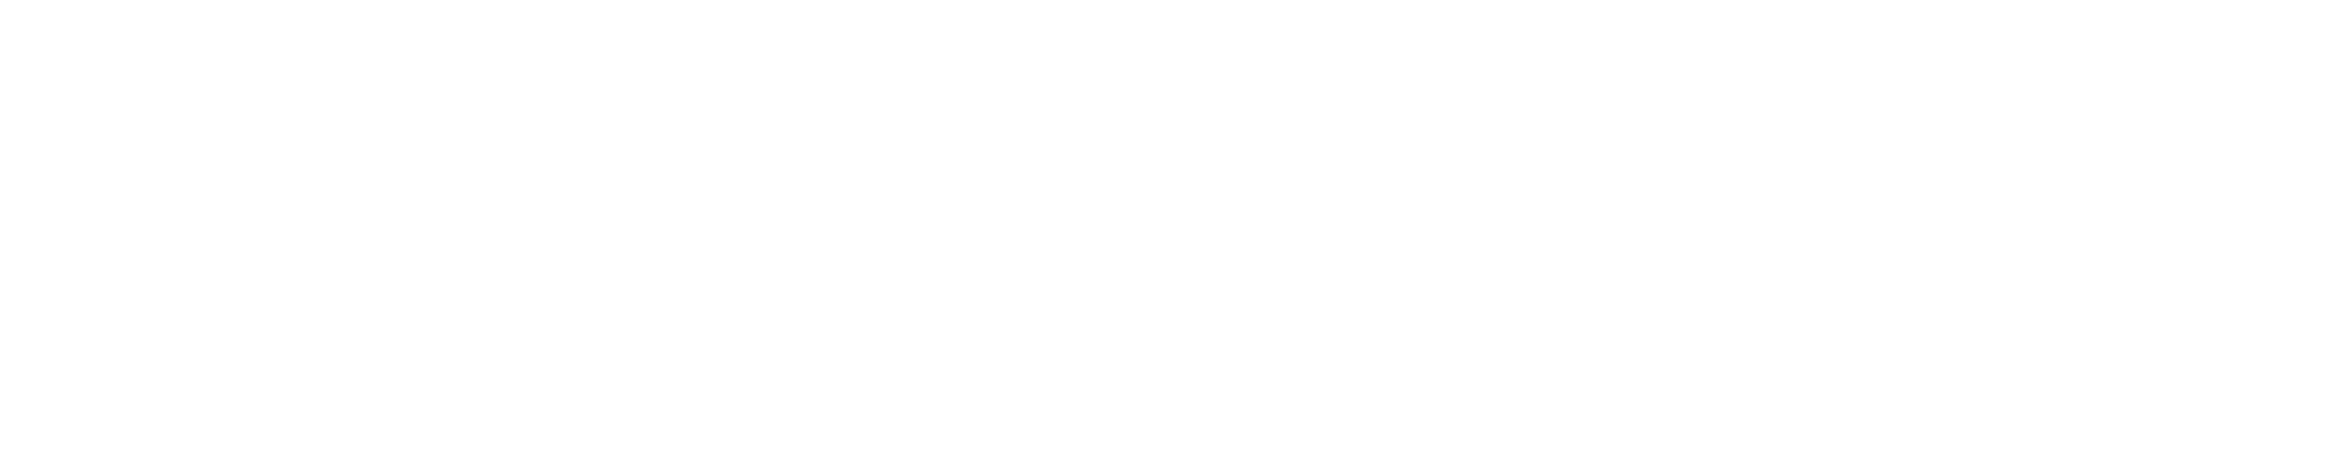 Goggans Funeral Home Logo